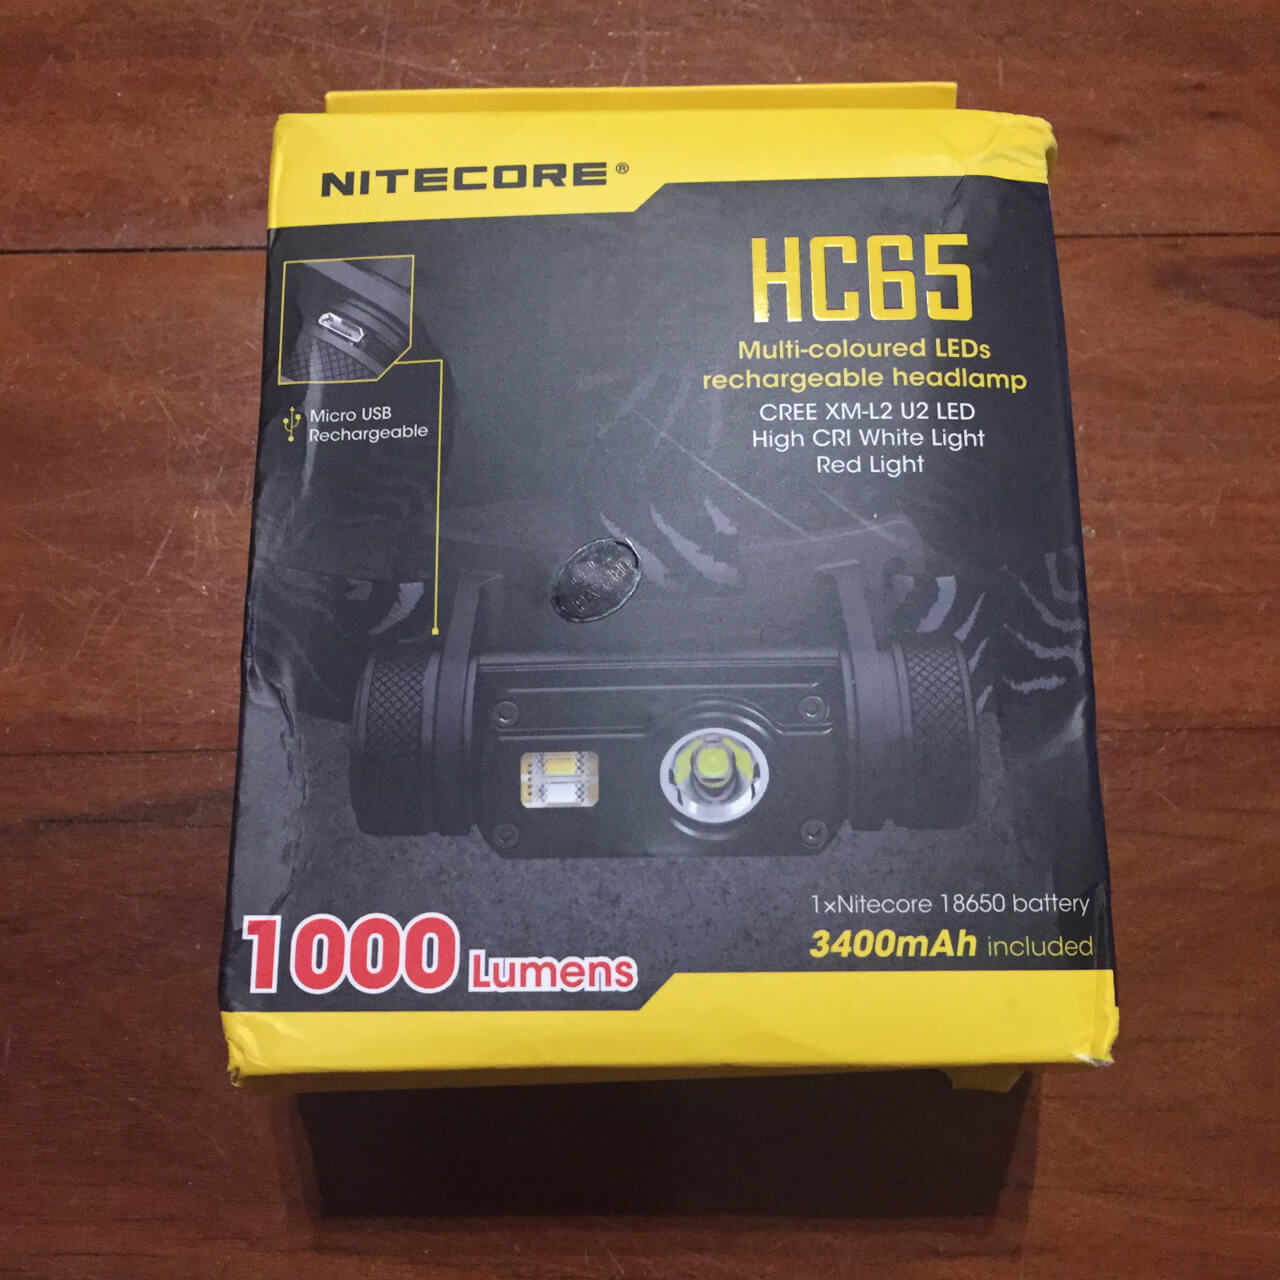 Nitecore HC65 Headlamp Packaging